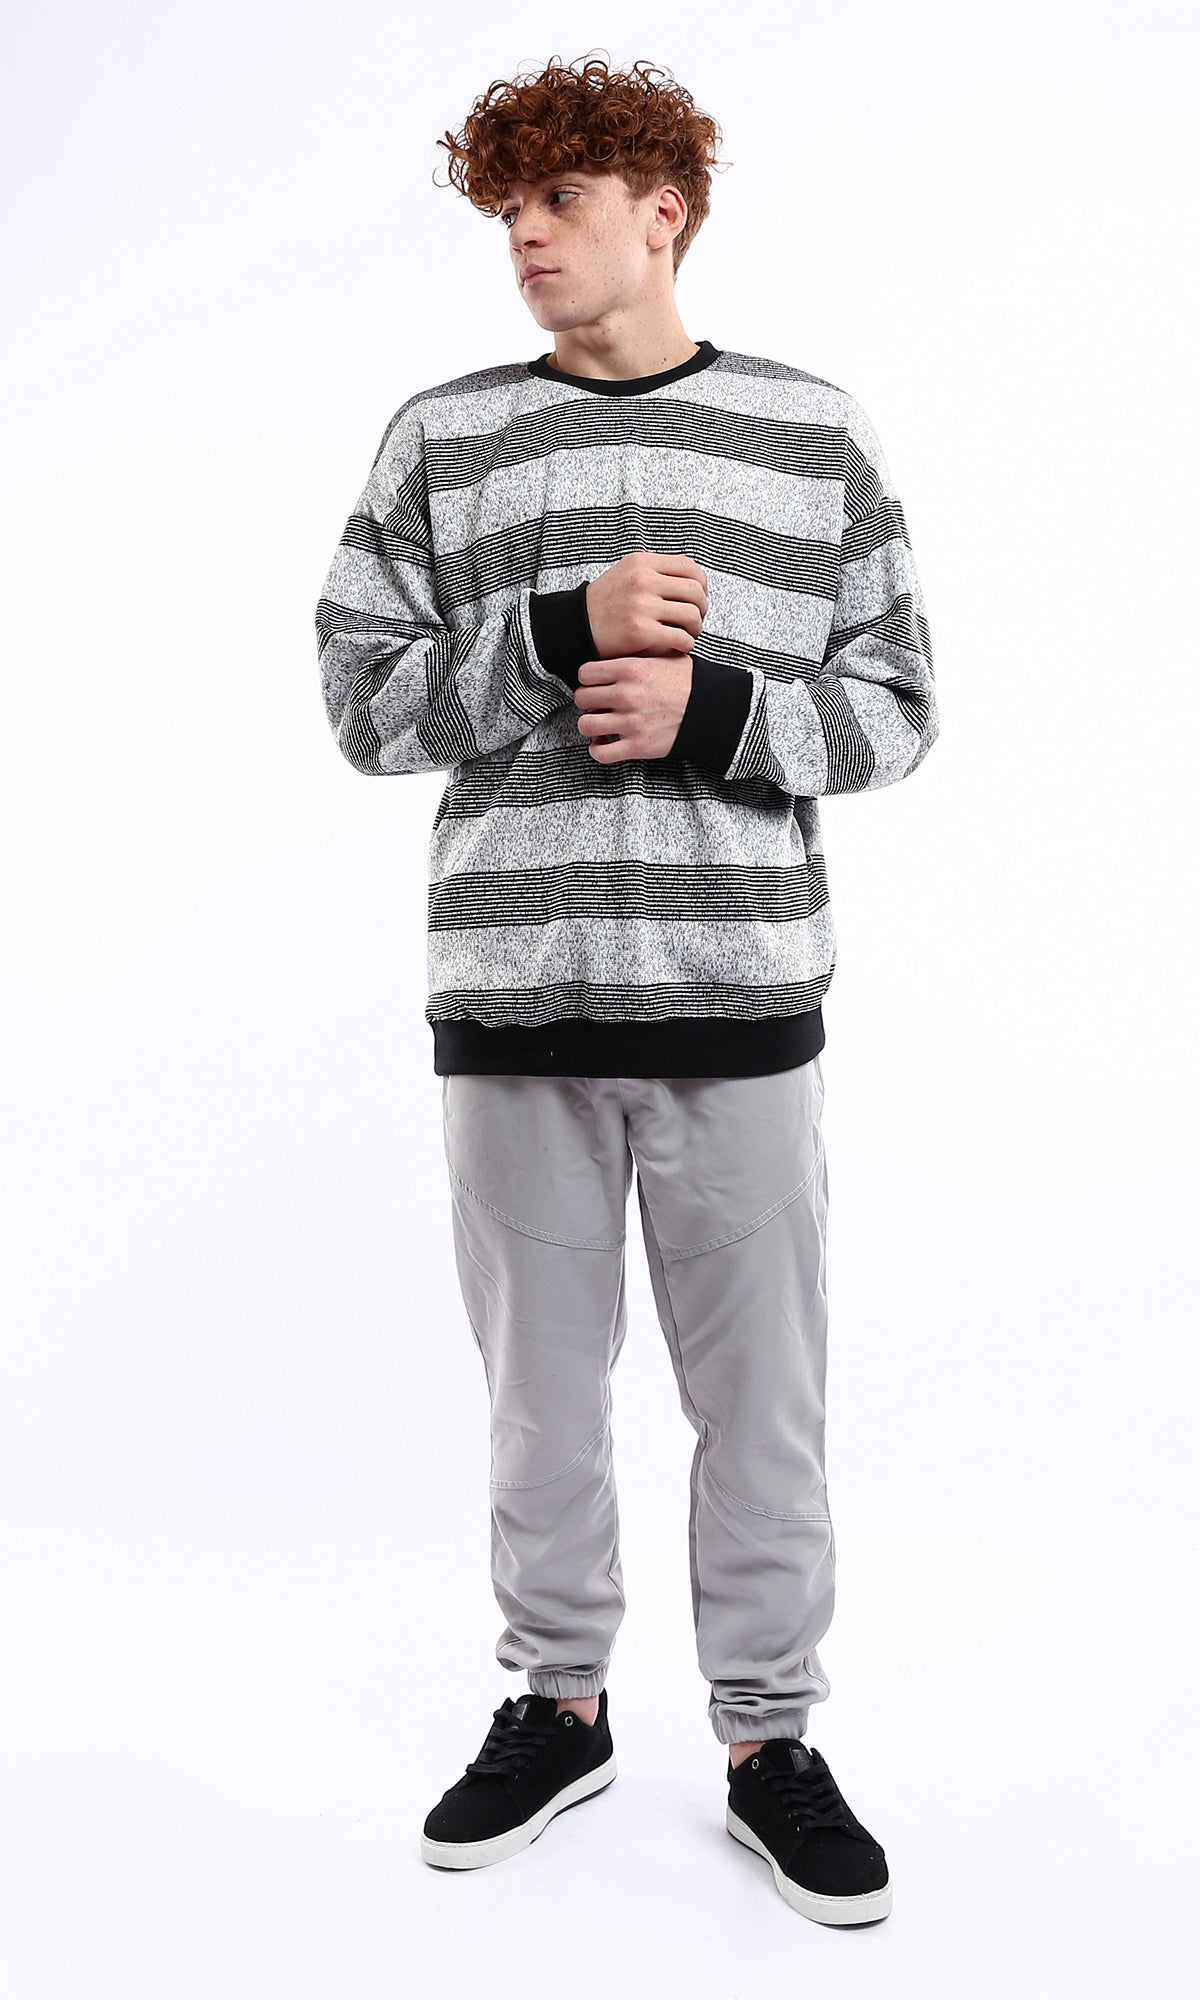 O177883 Long Sleeves Striped Grey & Black Winter Sweatshirt